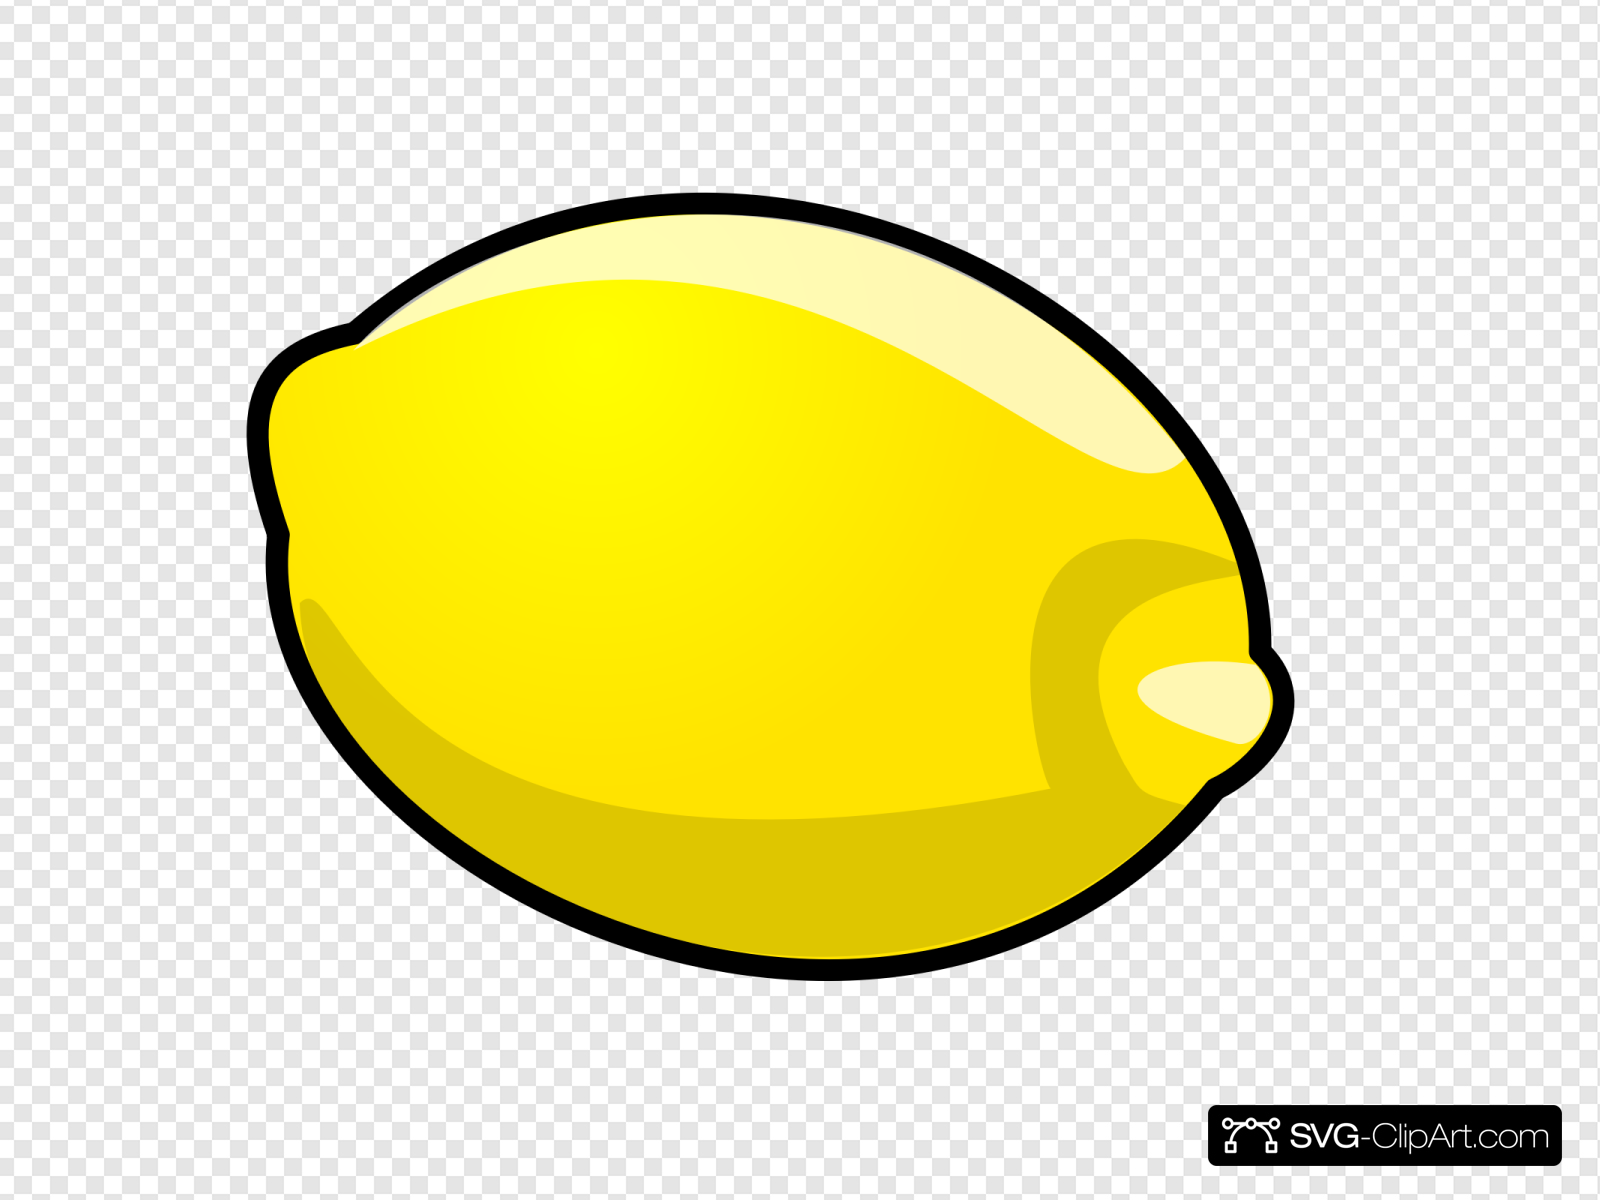 Lemon Clip art, Icon and SVG